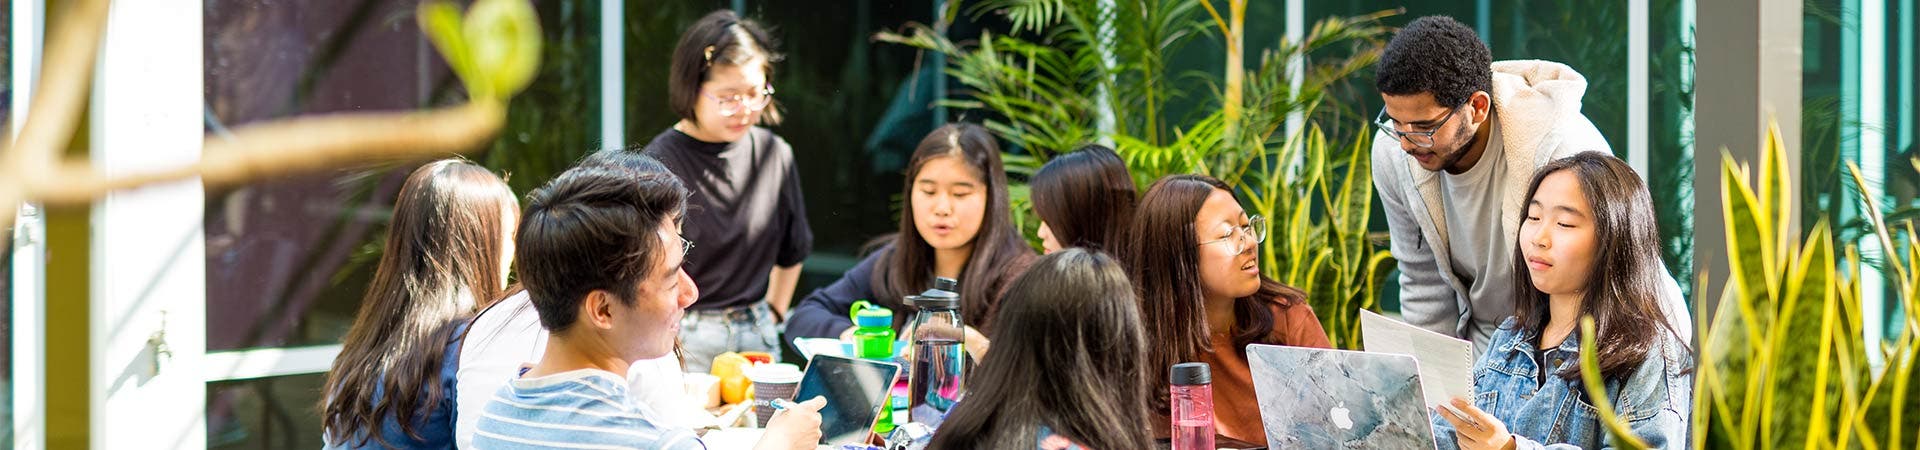 University of Sydney students studying together